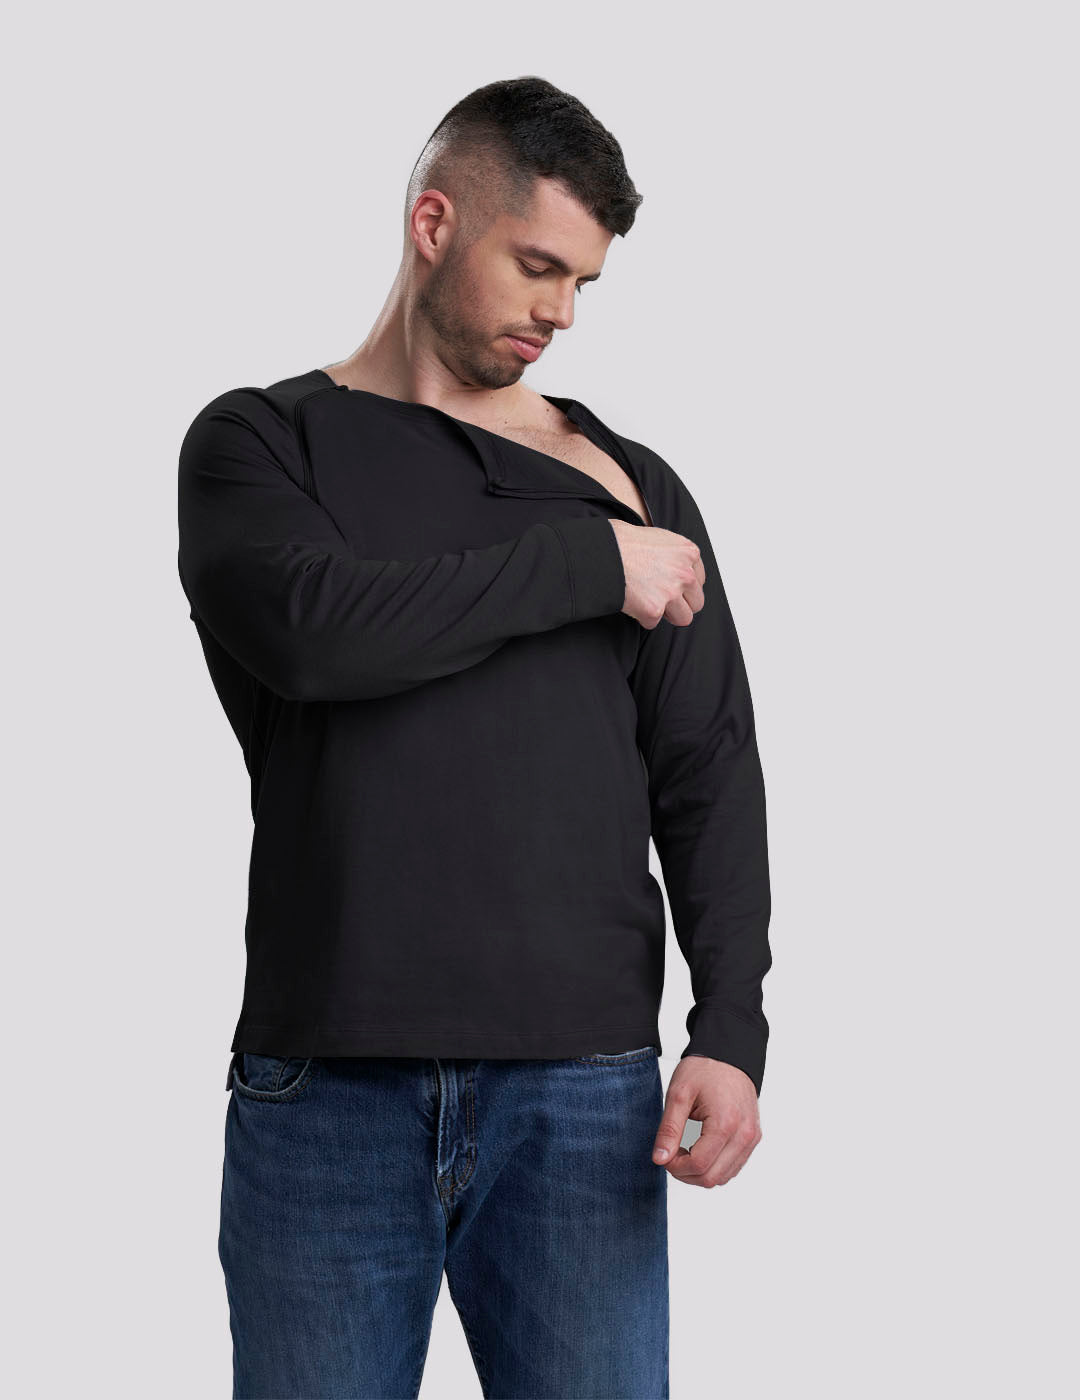 Men's Chest Port Access Shirt - Care+Wear